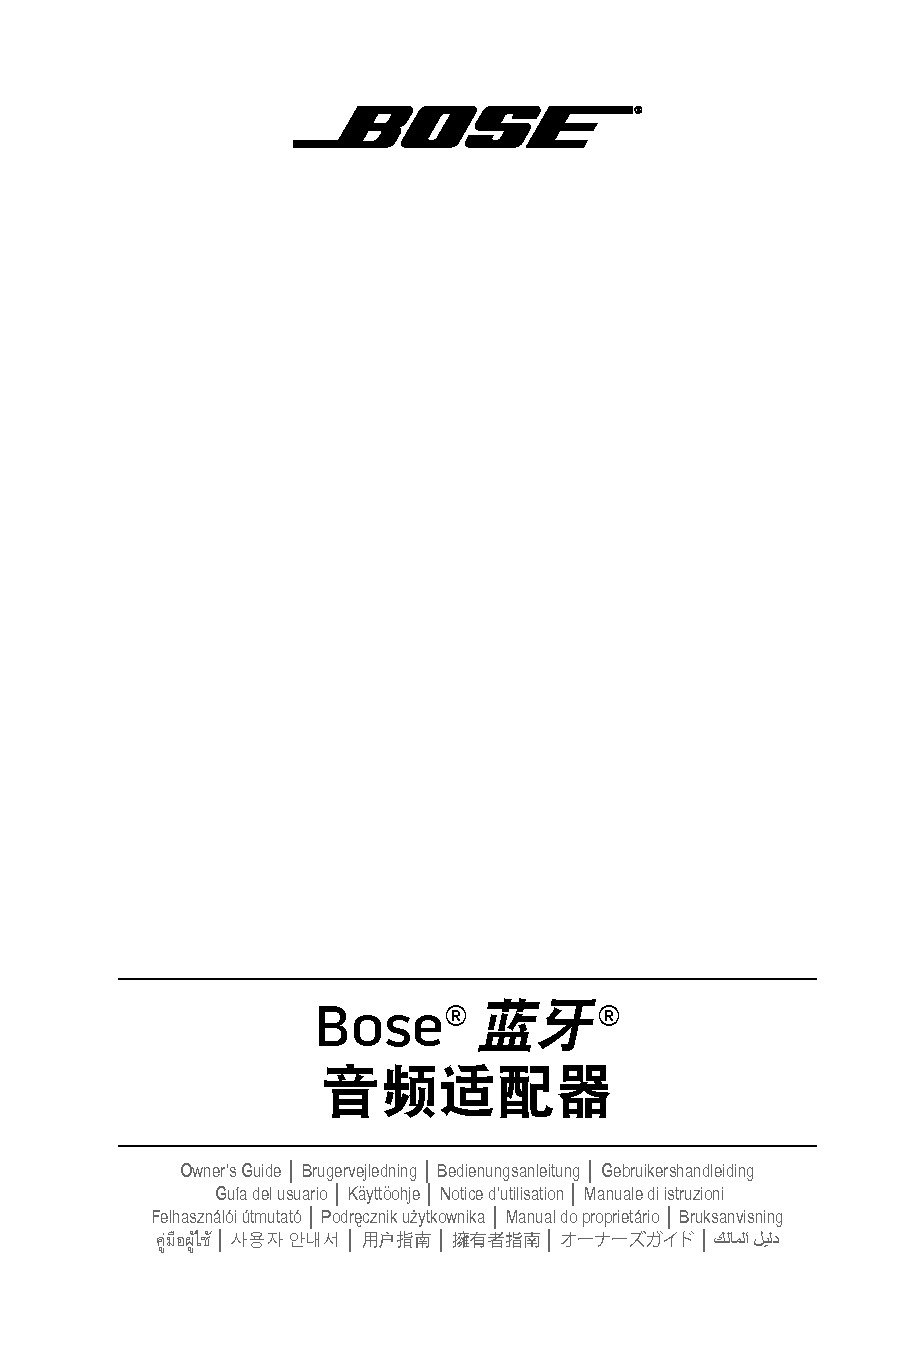 博士 Bose BLUETOOTH AUDIO ADAPTER 用户指南 封面